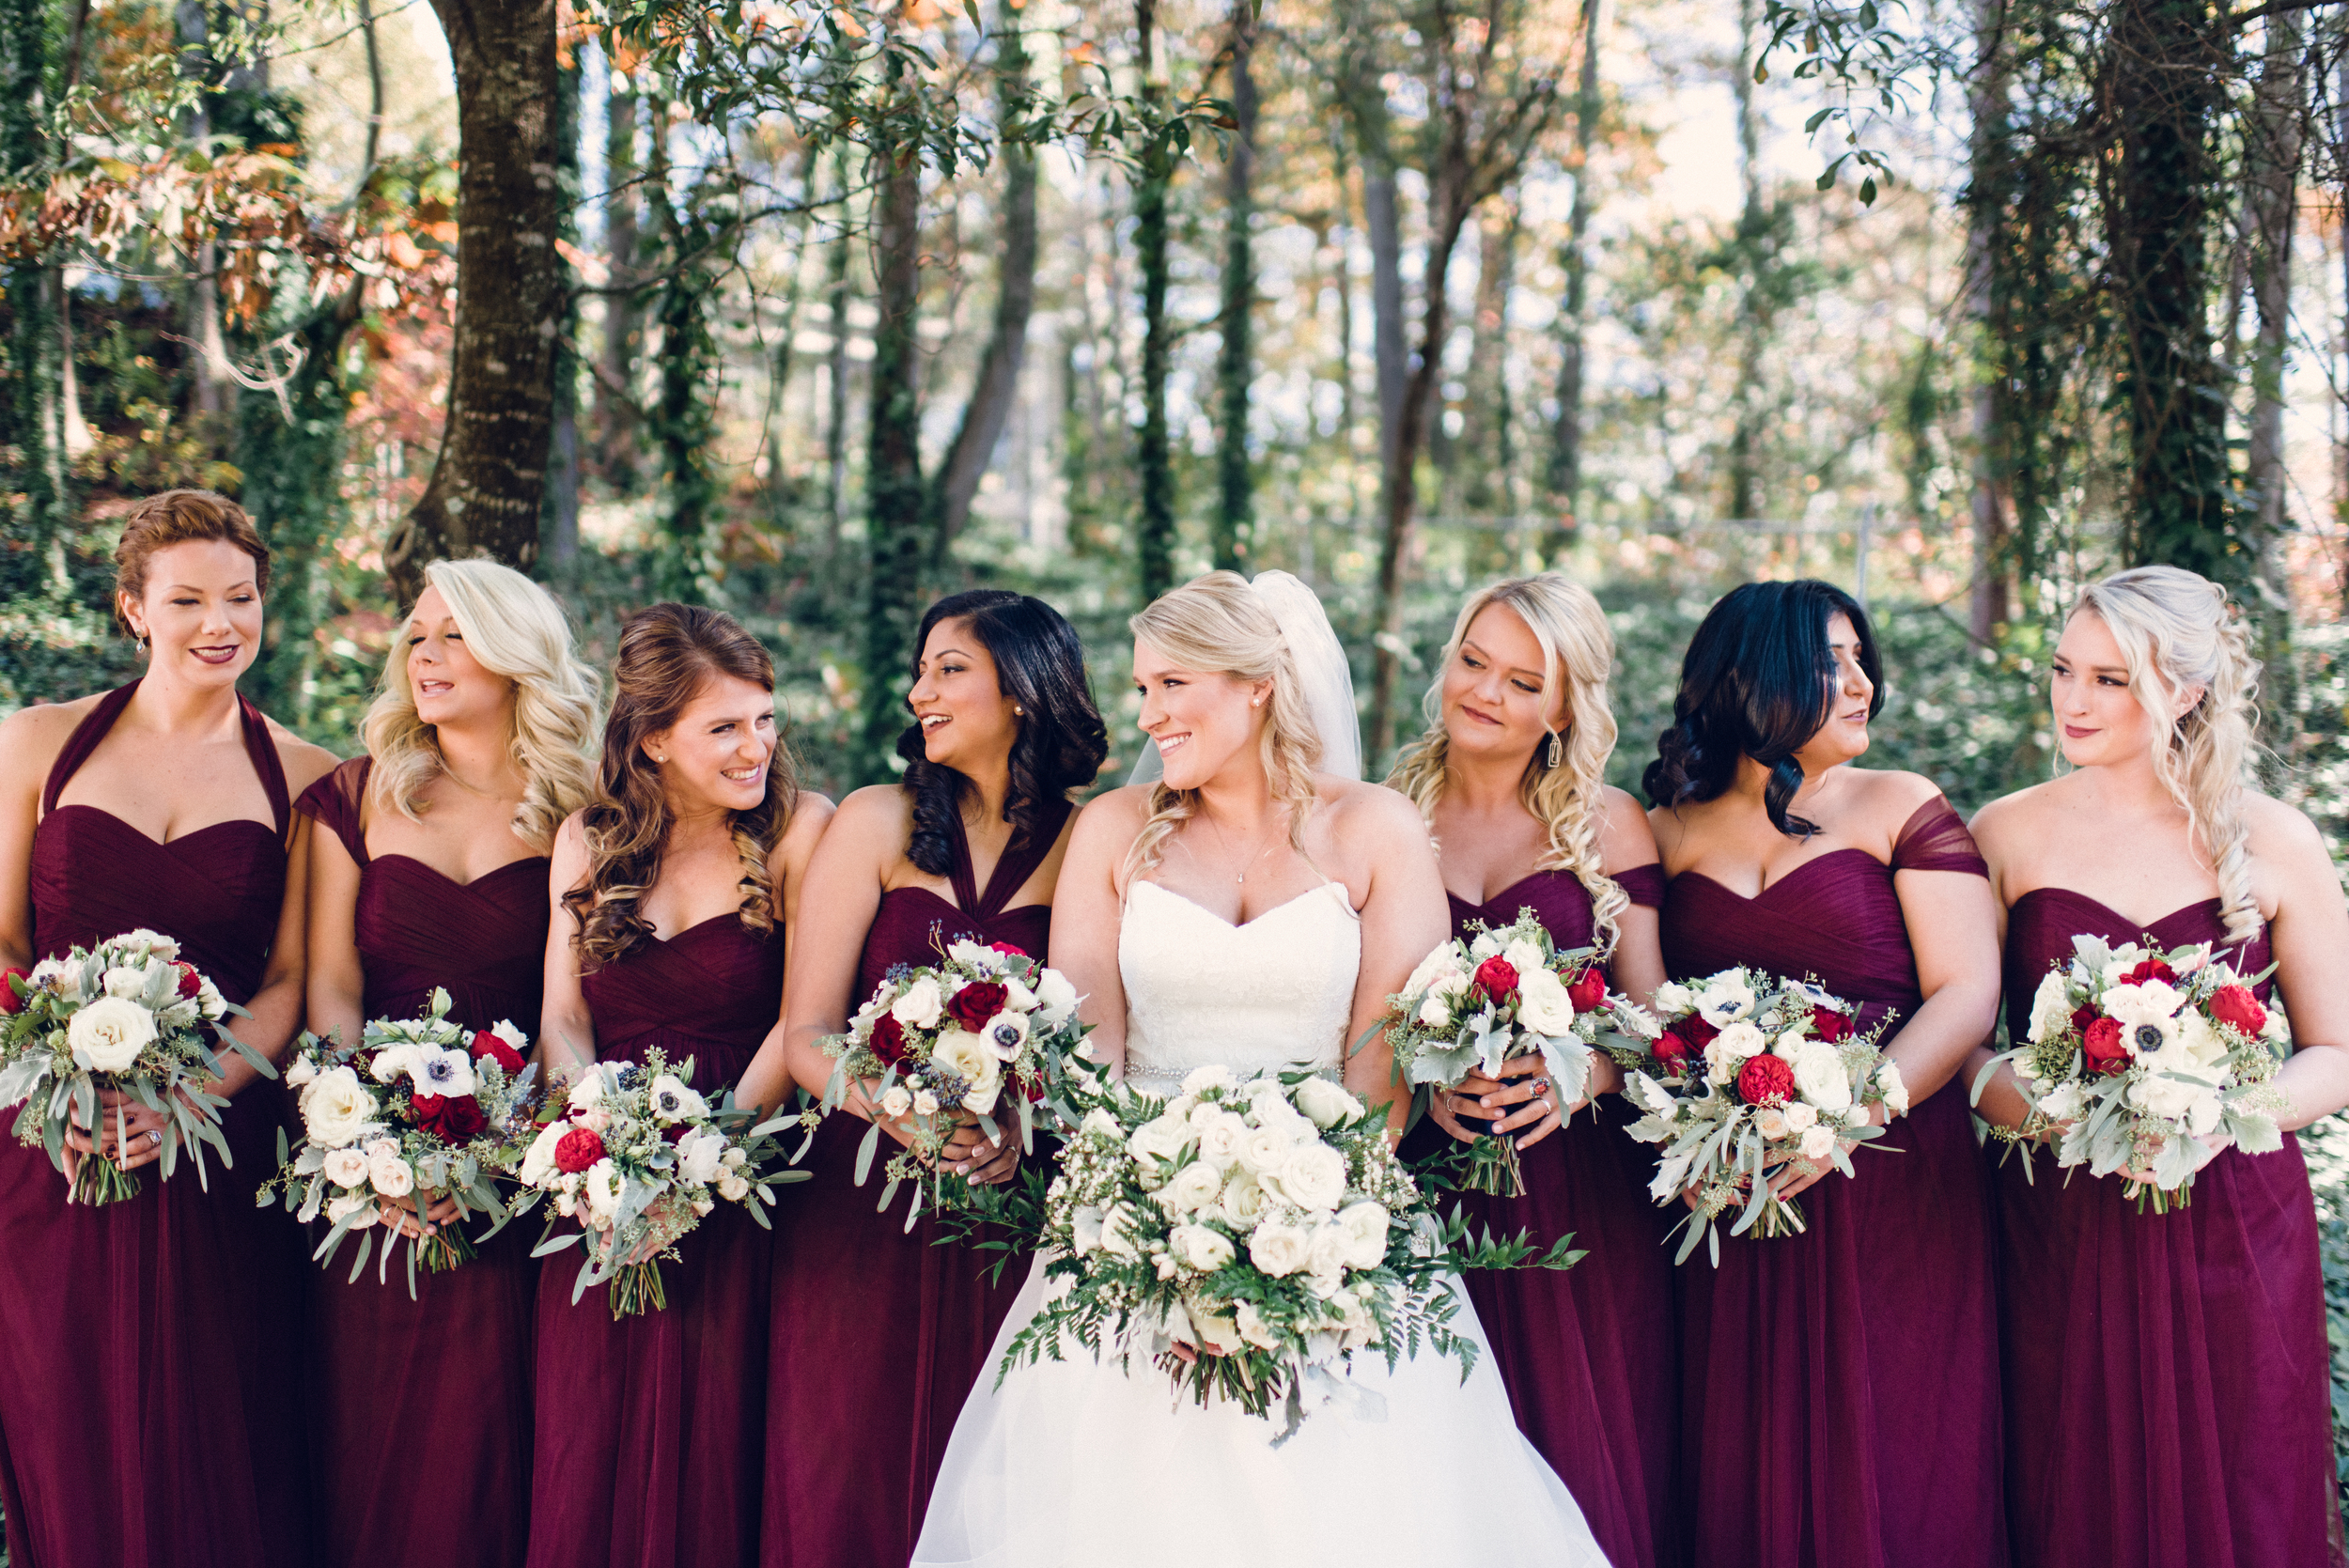 wine-berry-bridesmaids-dresses-winter-wedding